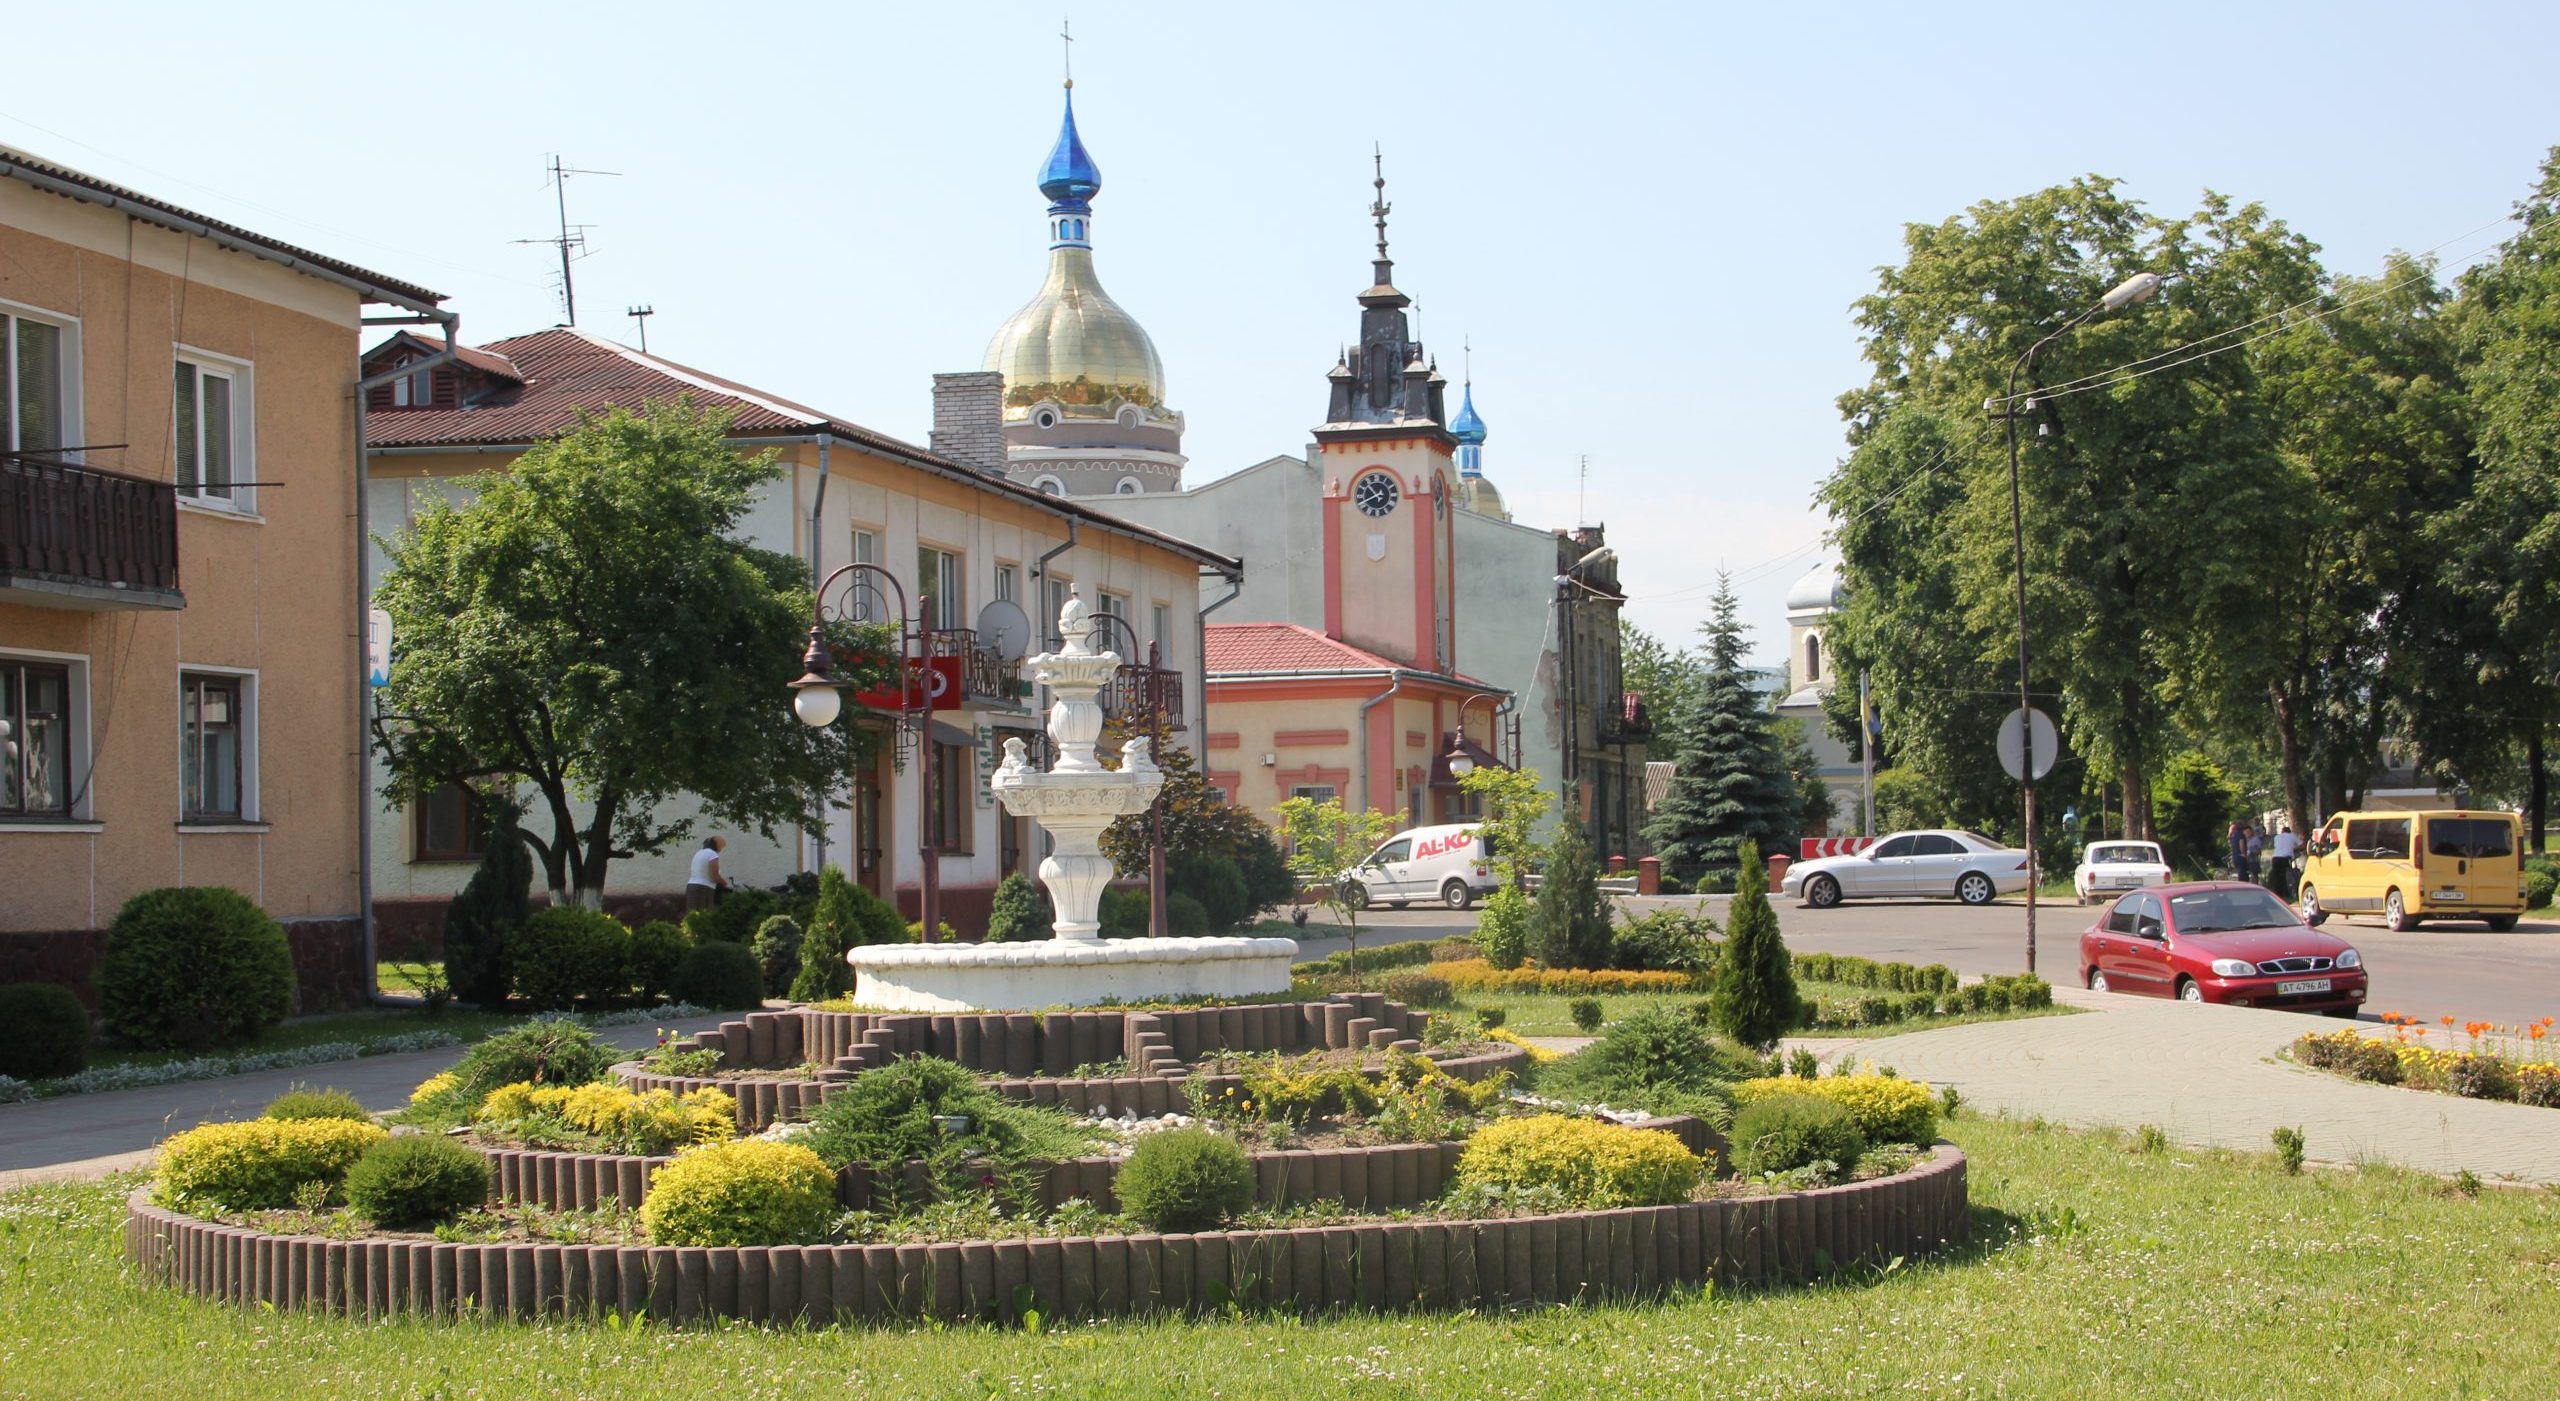 Bolekhiv. Photo of the Bolekhiv Town Council